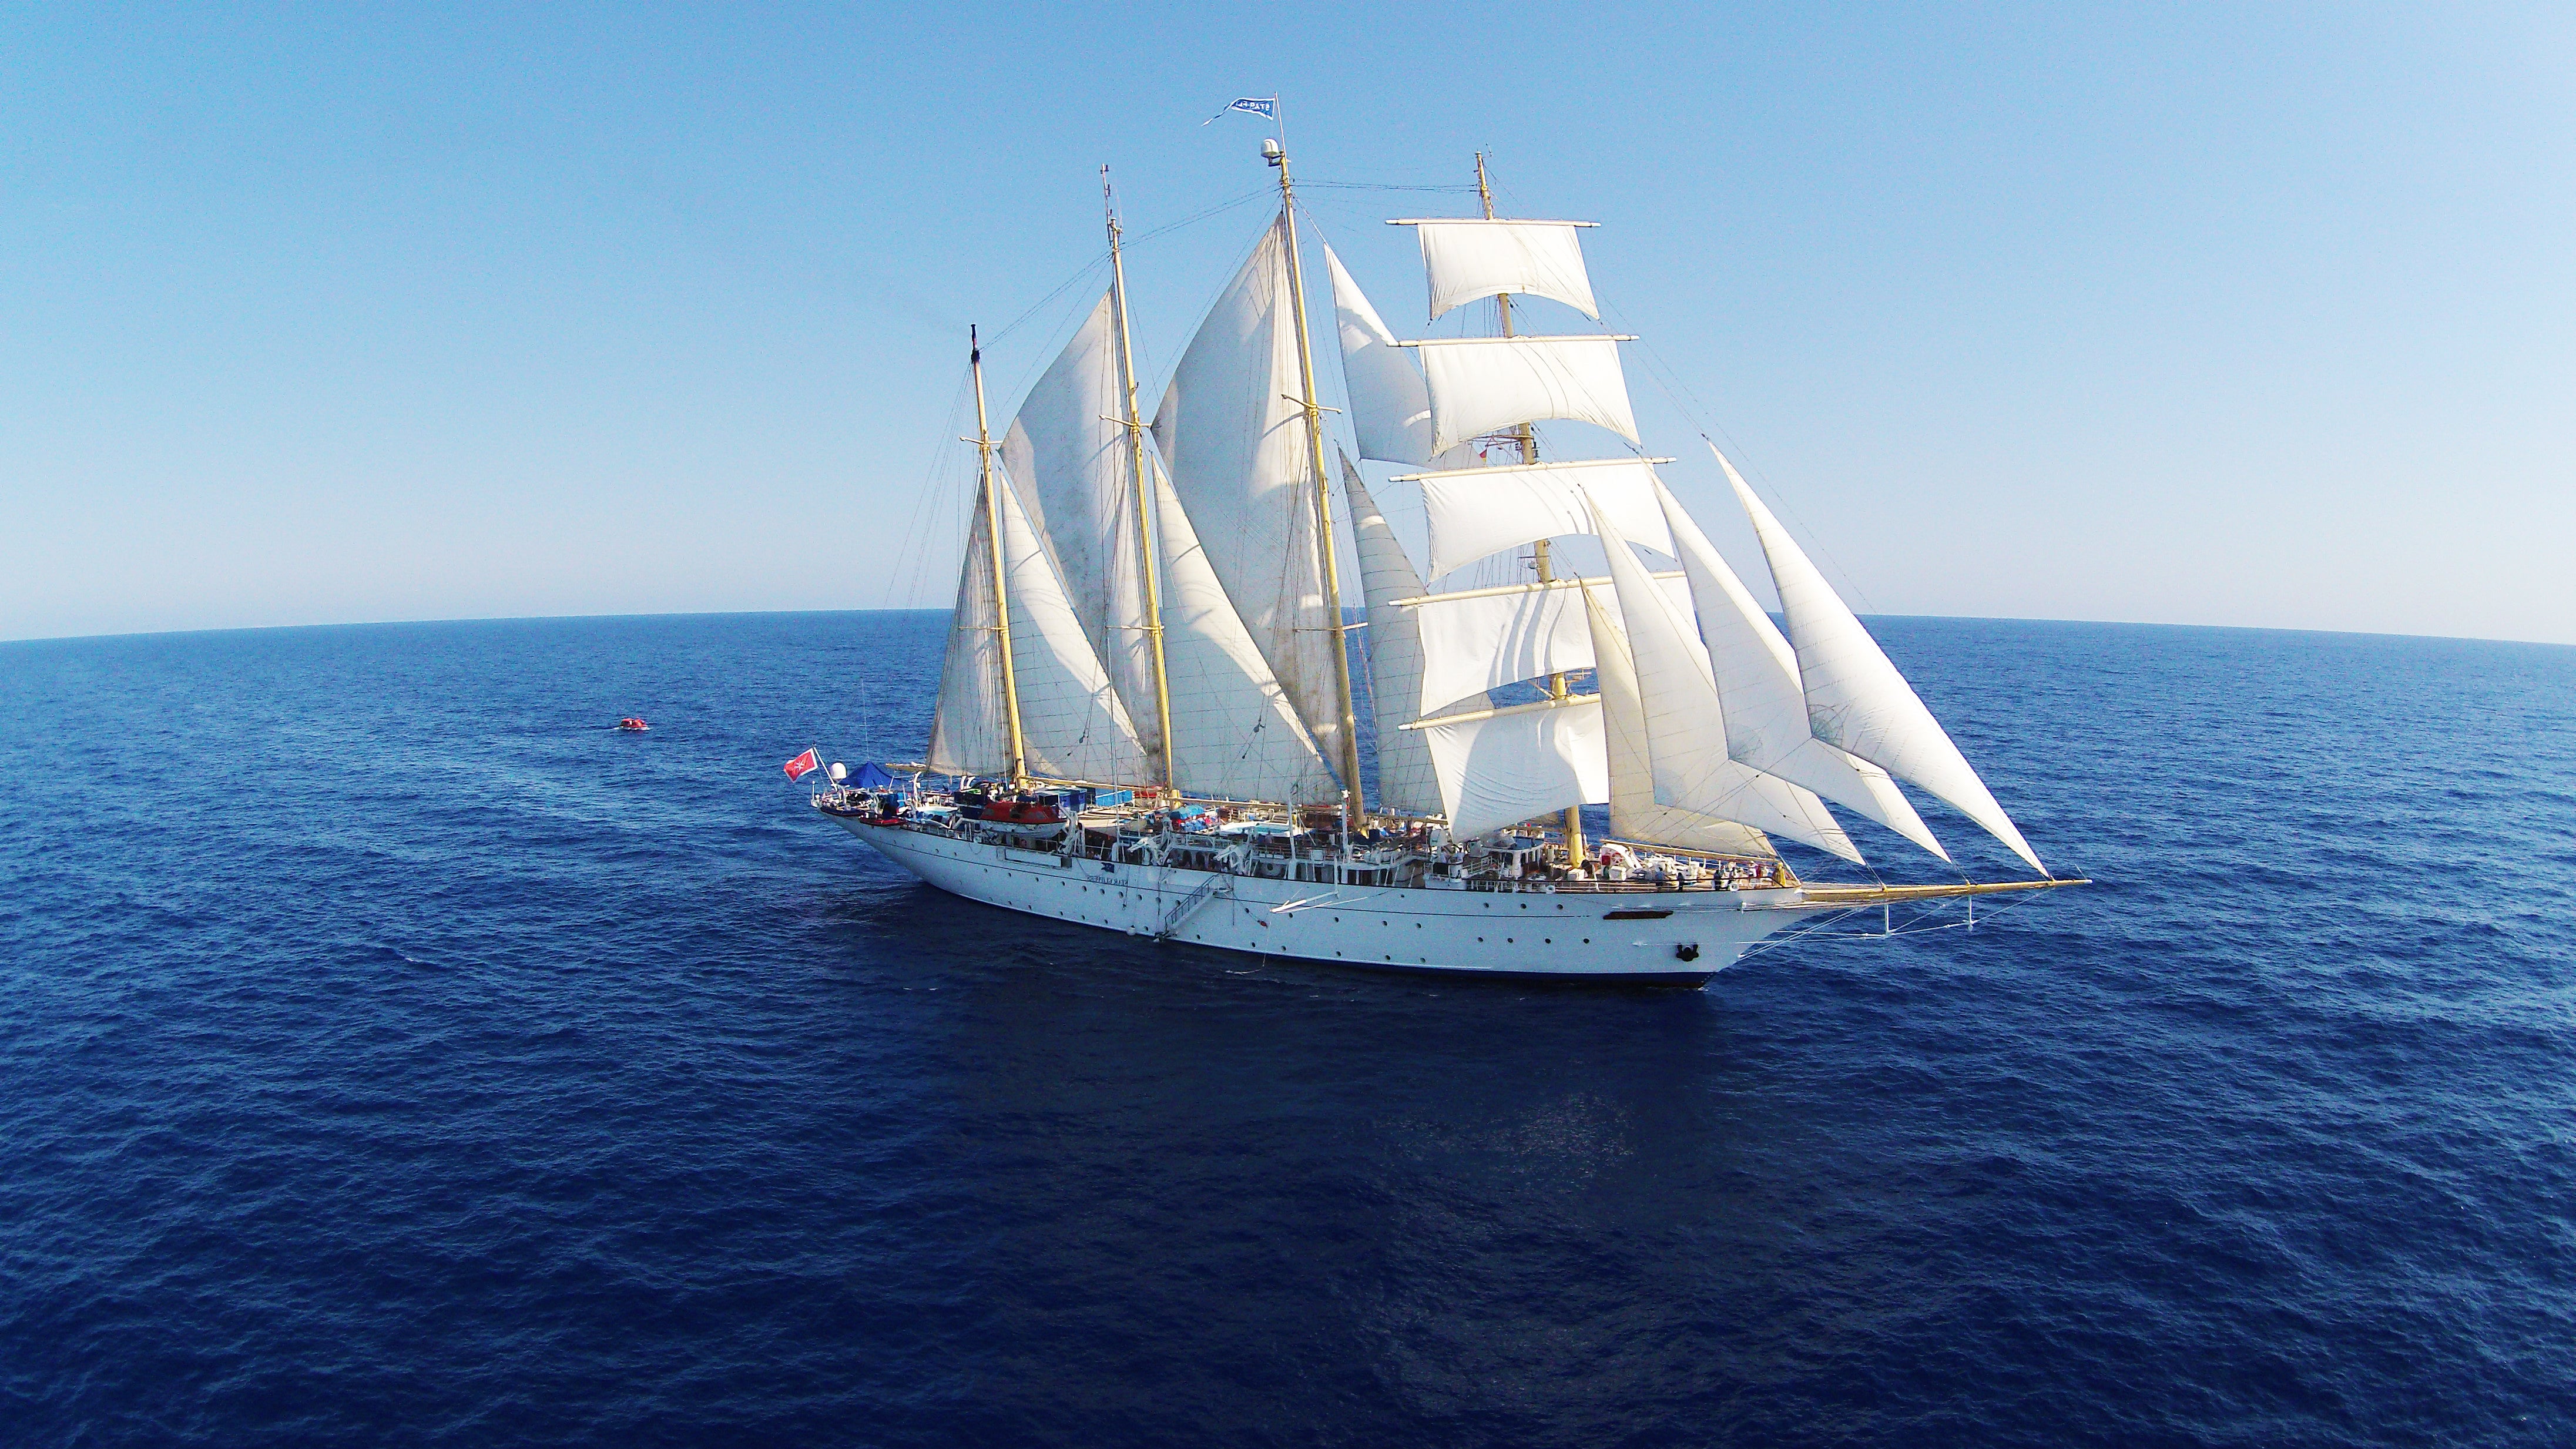 The sailing ship Star Flyer